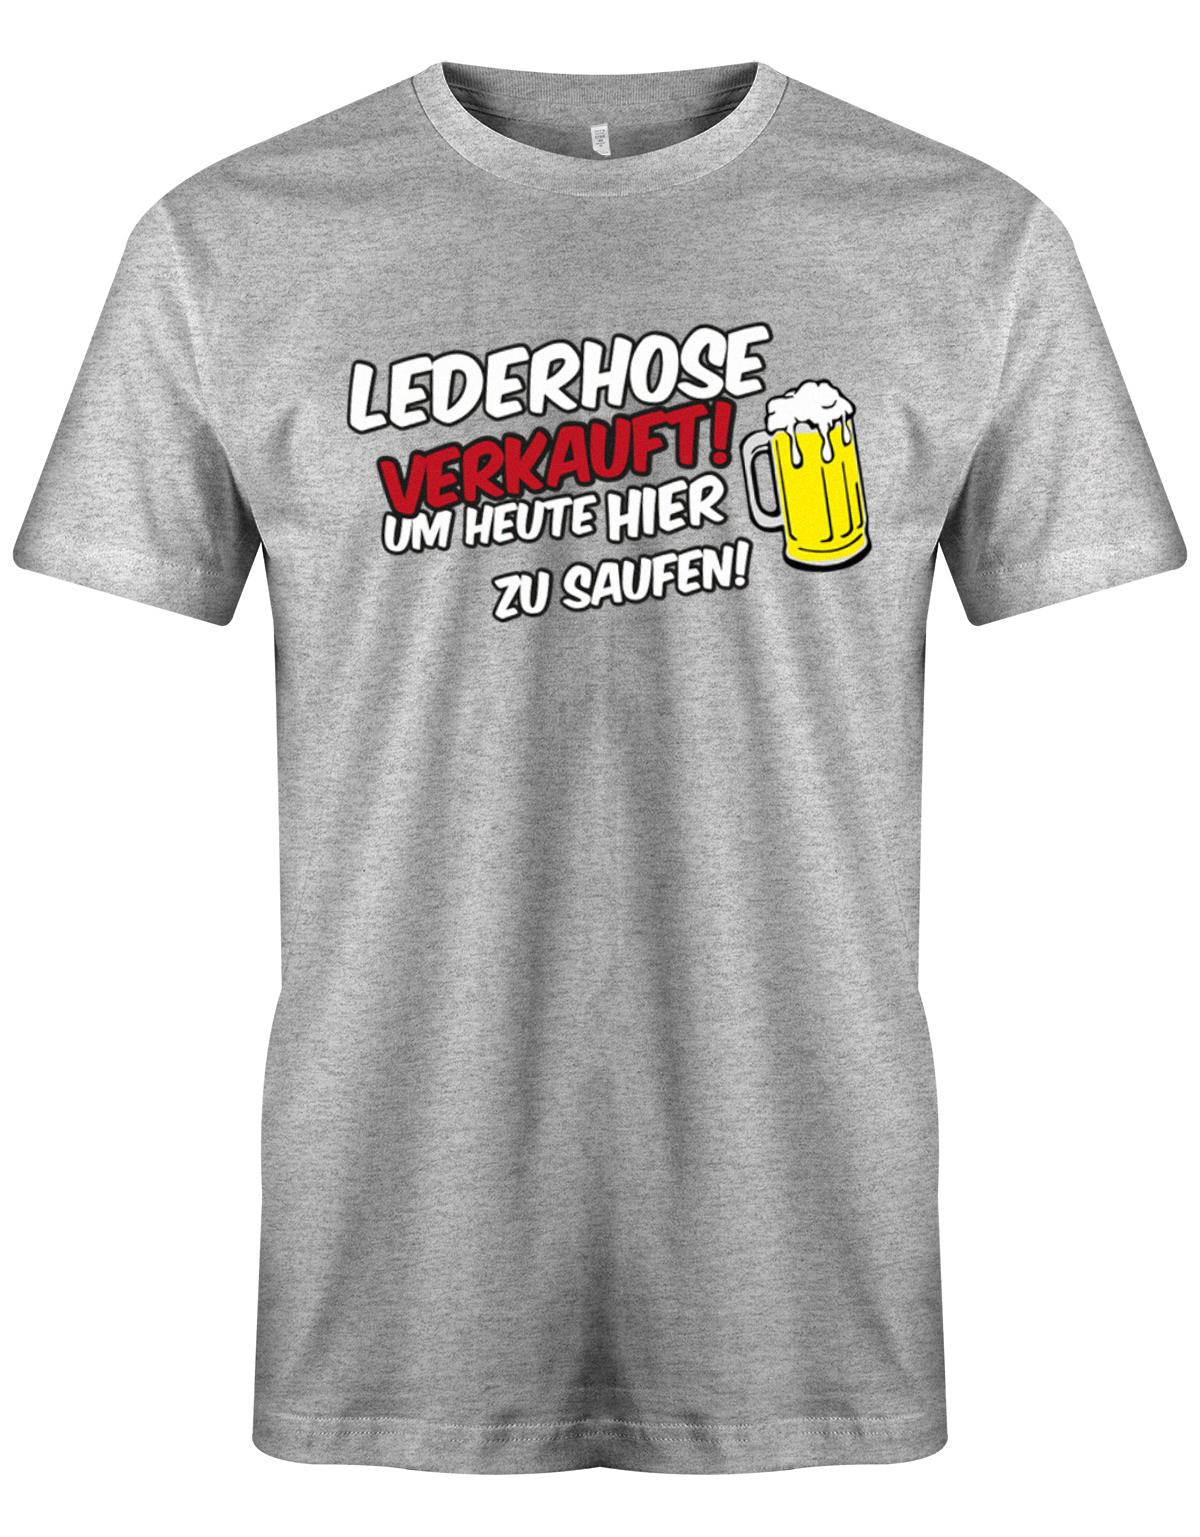 lederhose-verkauft-um-heute-hier-zu-saufen-herren-Shirt-Grau